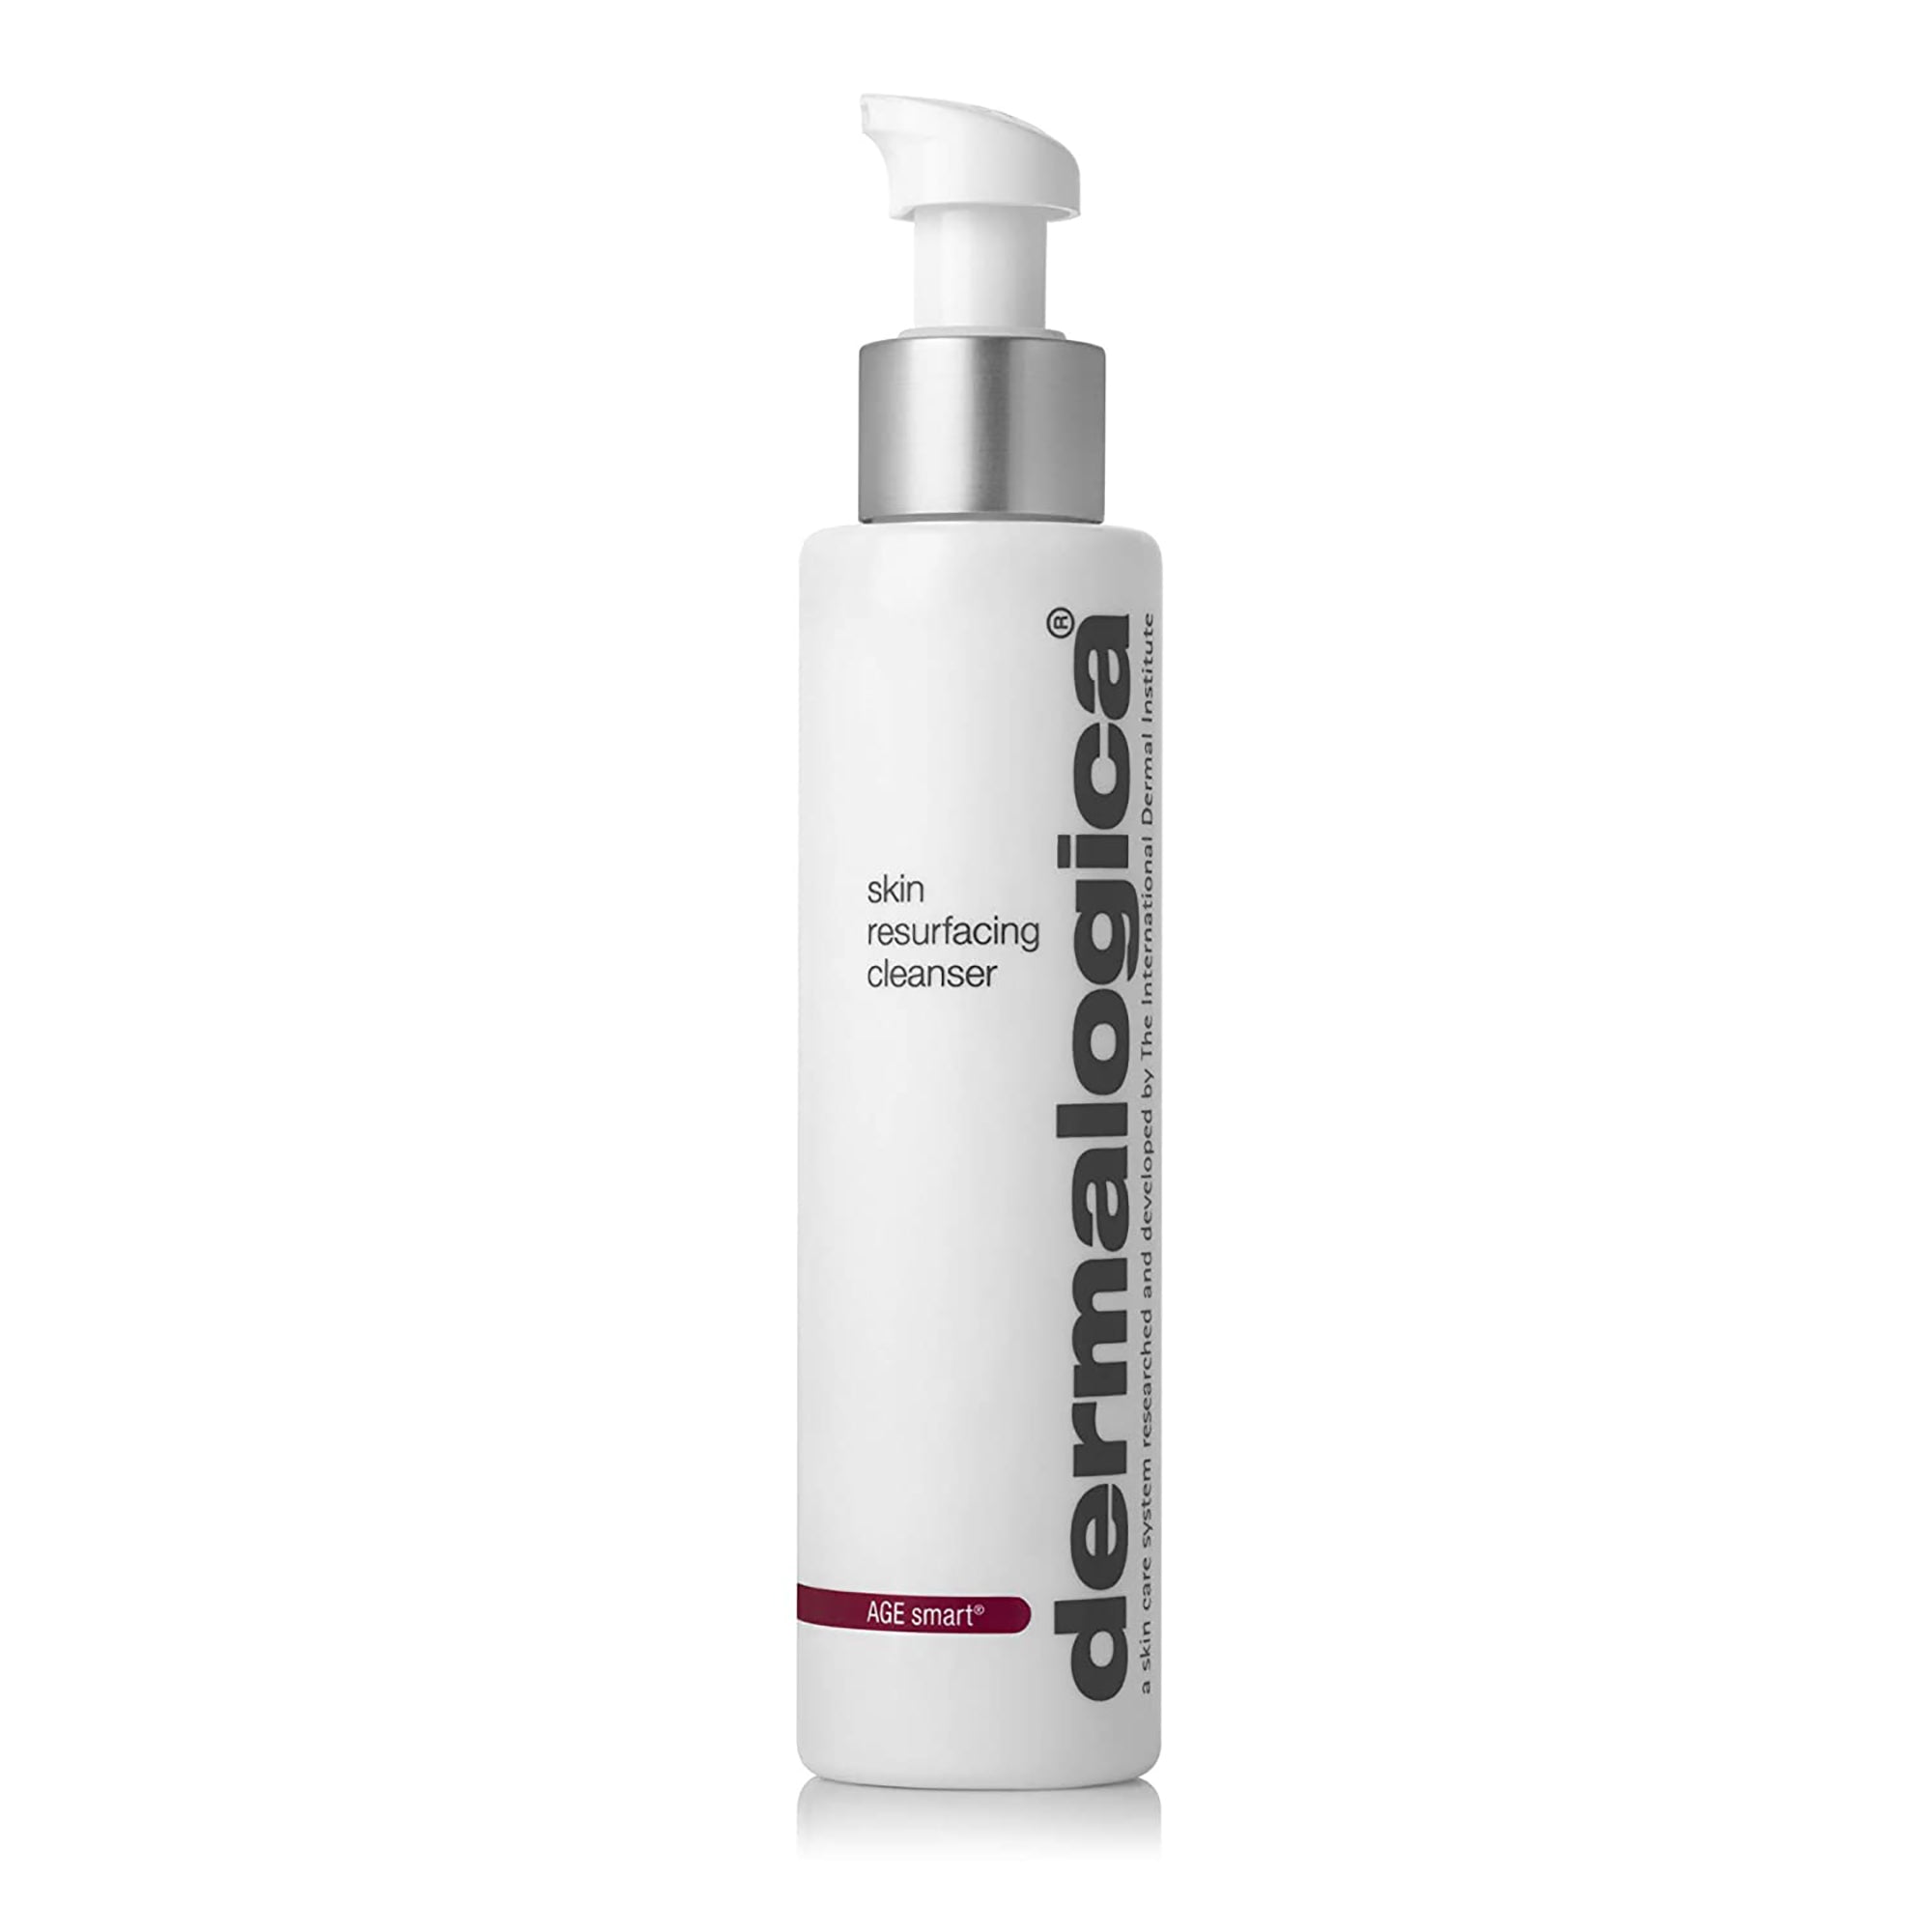 Dermalogica Age Smart Skin Resurfacing Cleanser / 5.1OZ